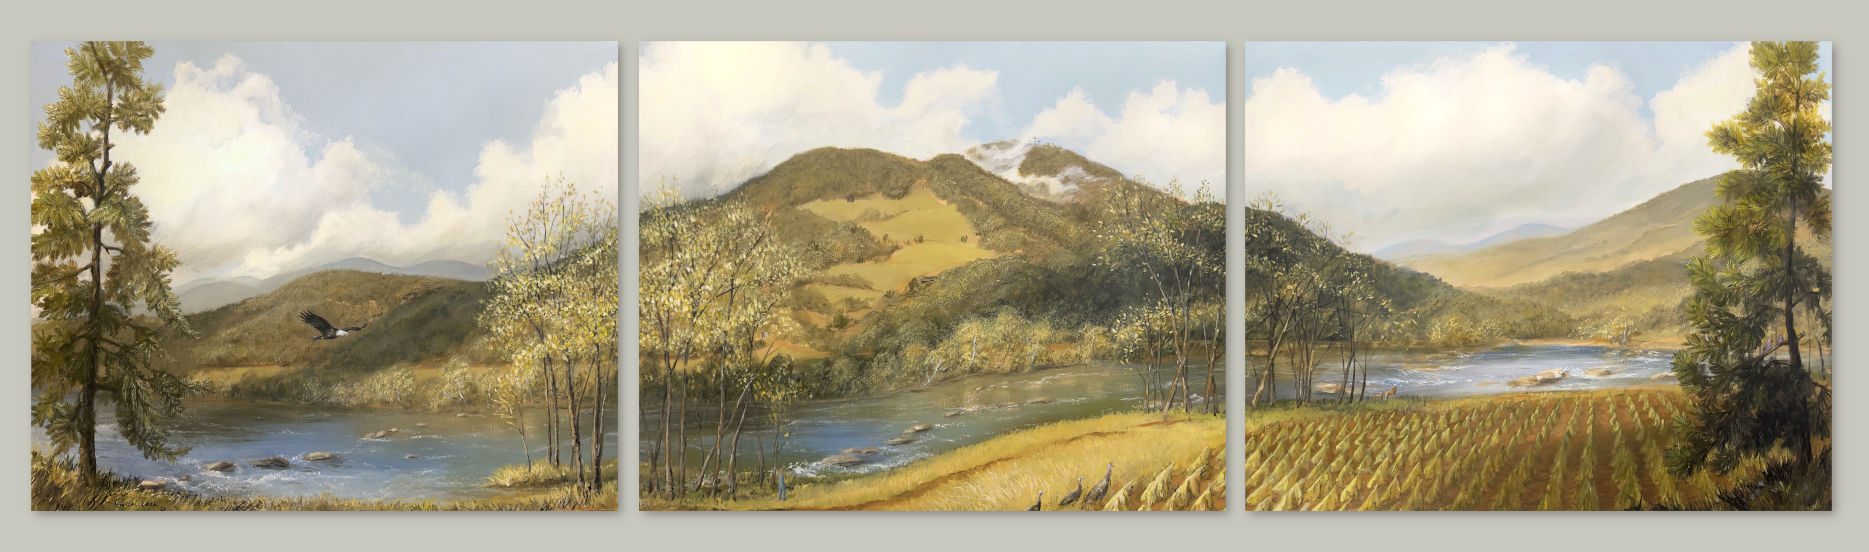 A Christian Landscape Painting